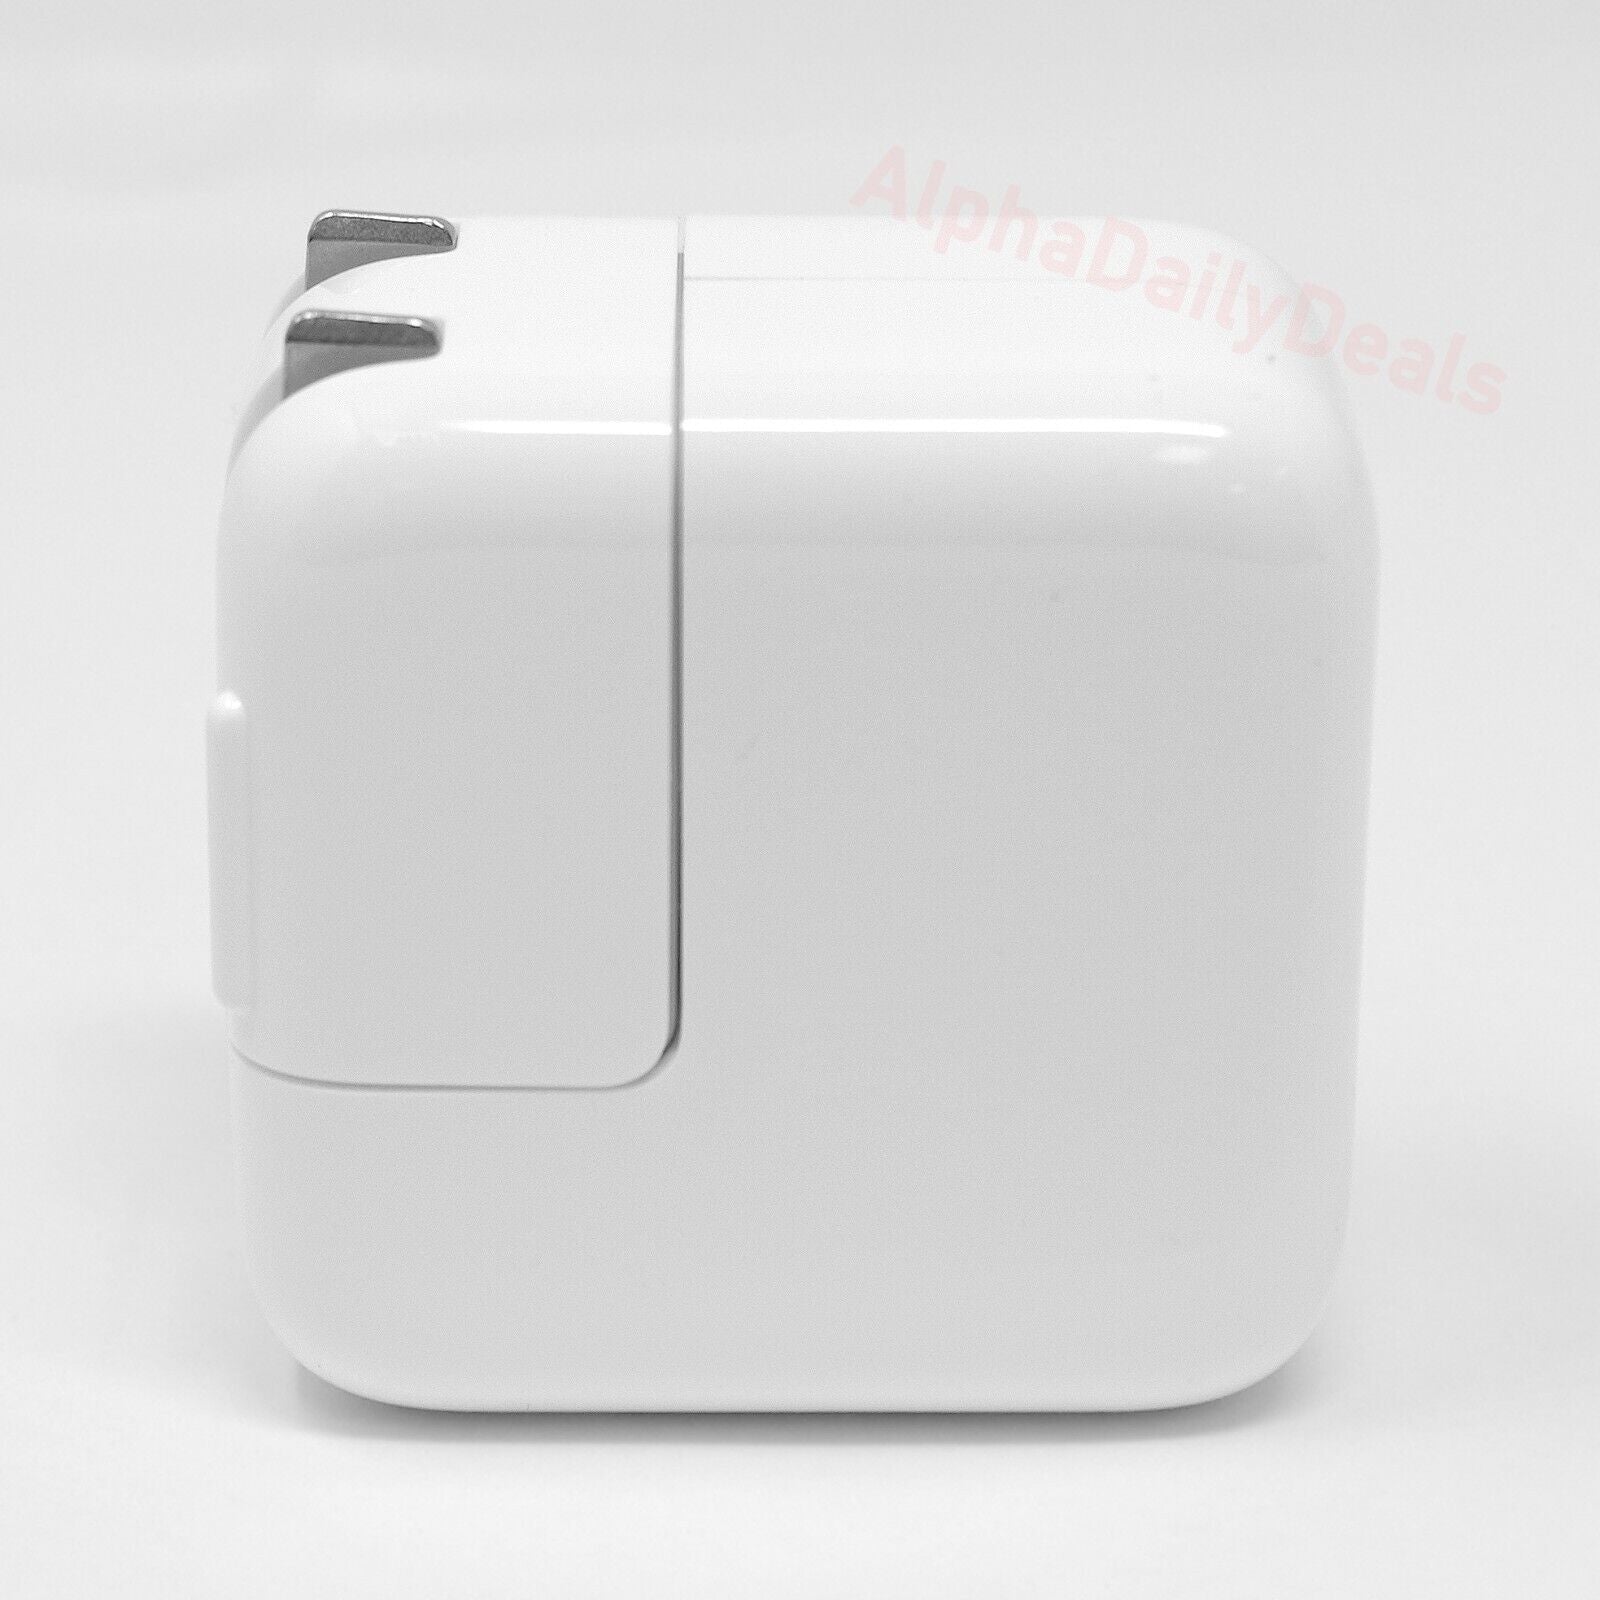 Genuine OEM Apple 10W USB Power Adapter Wall Charger A1357 iPad 2 3 4 Air Mini